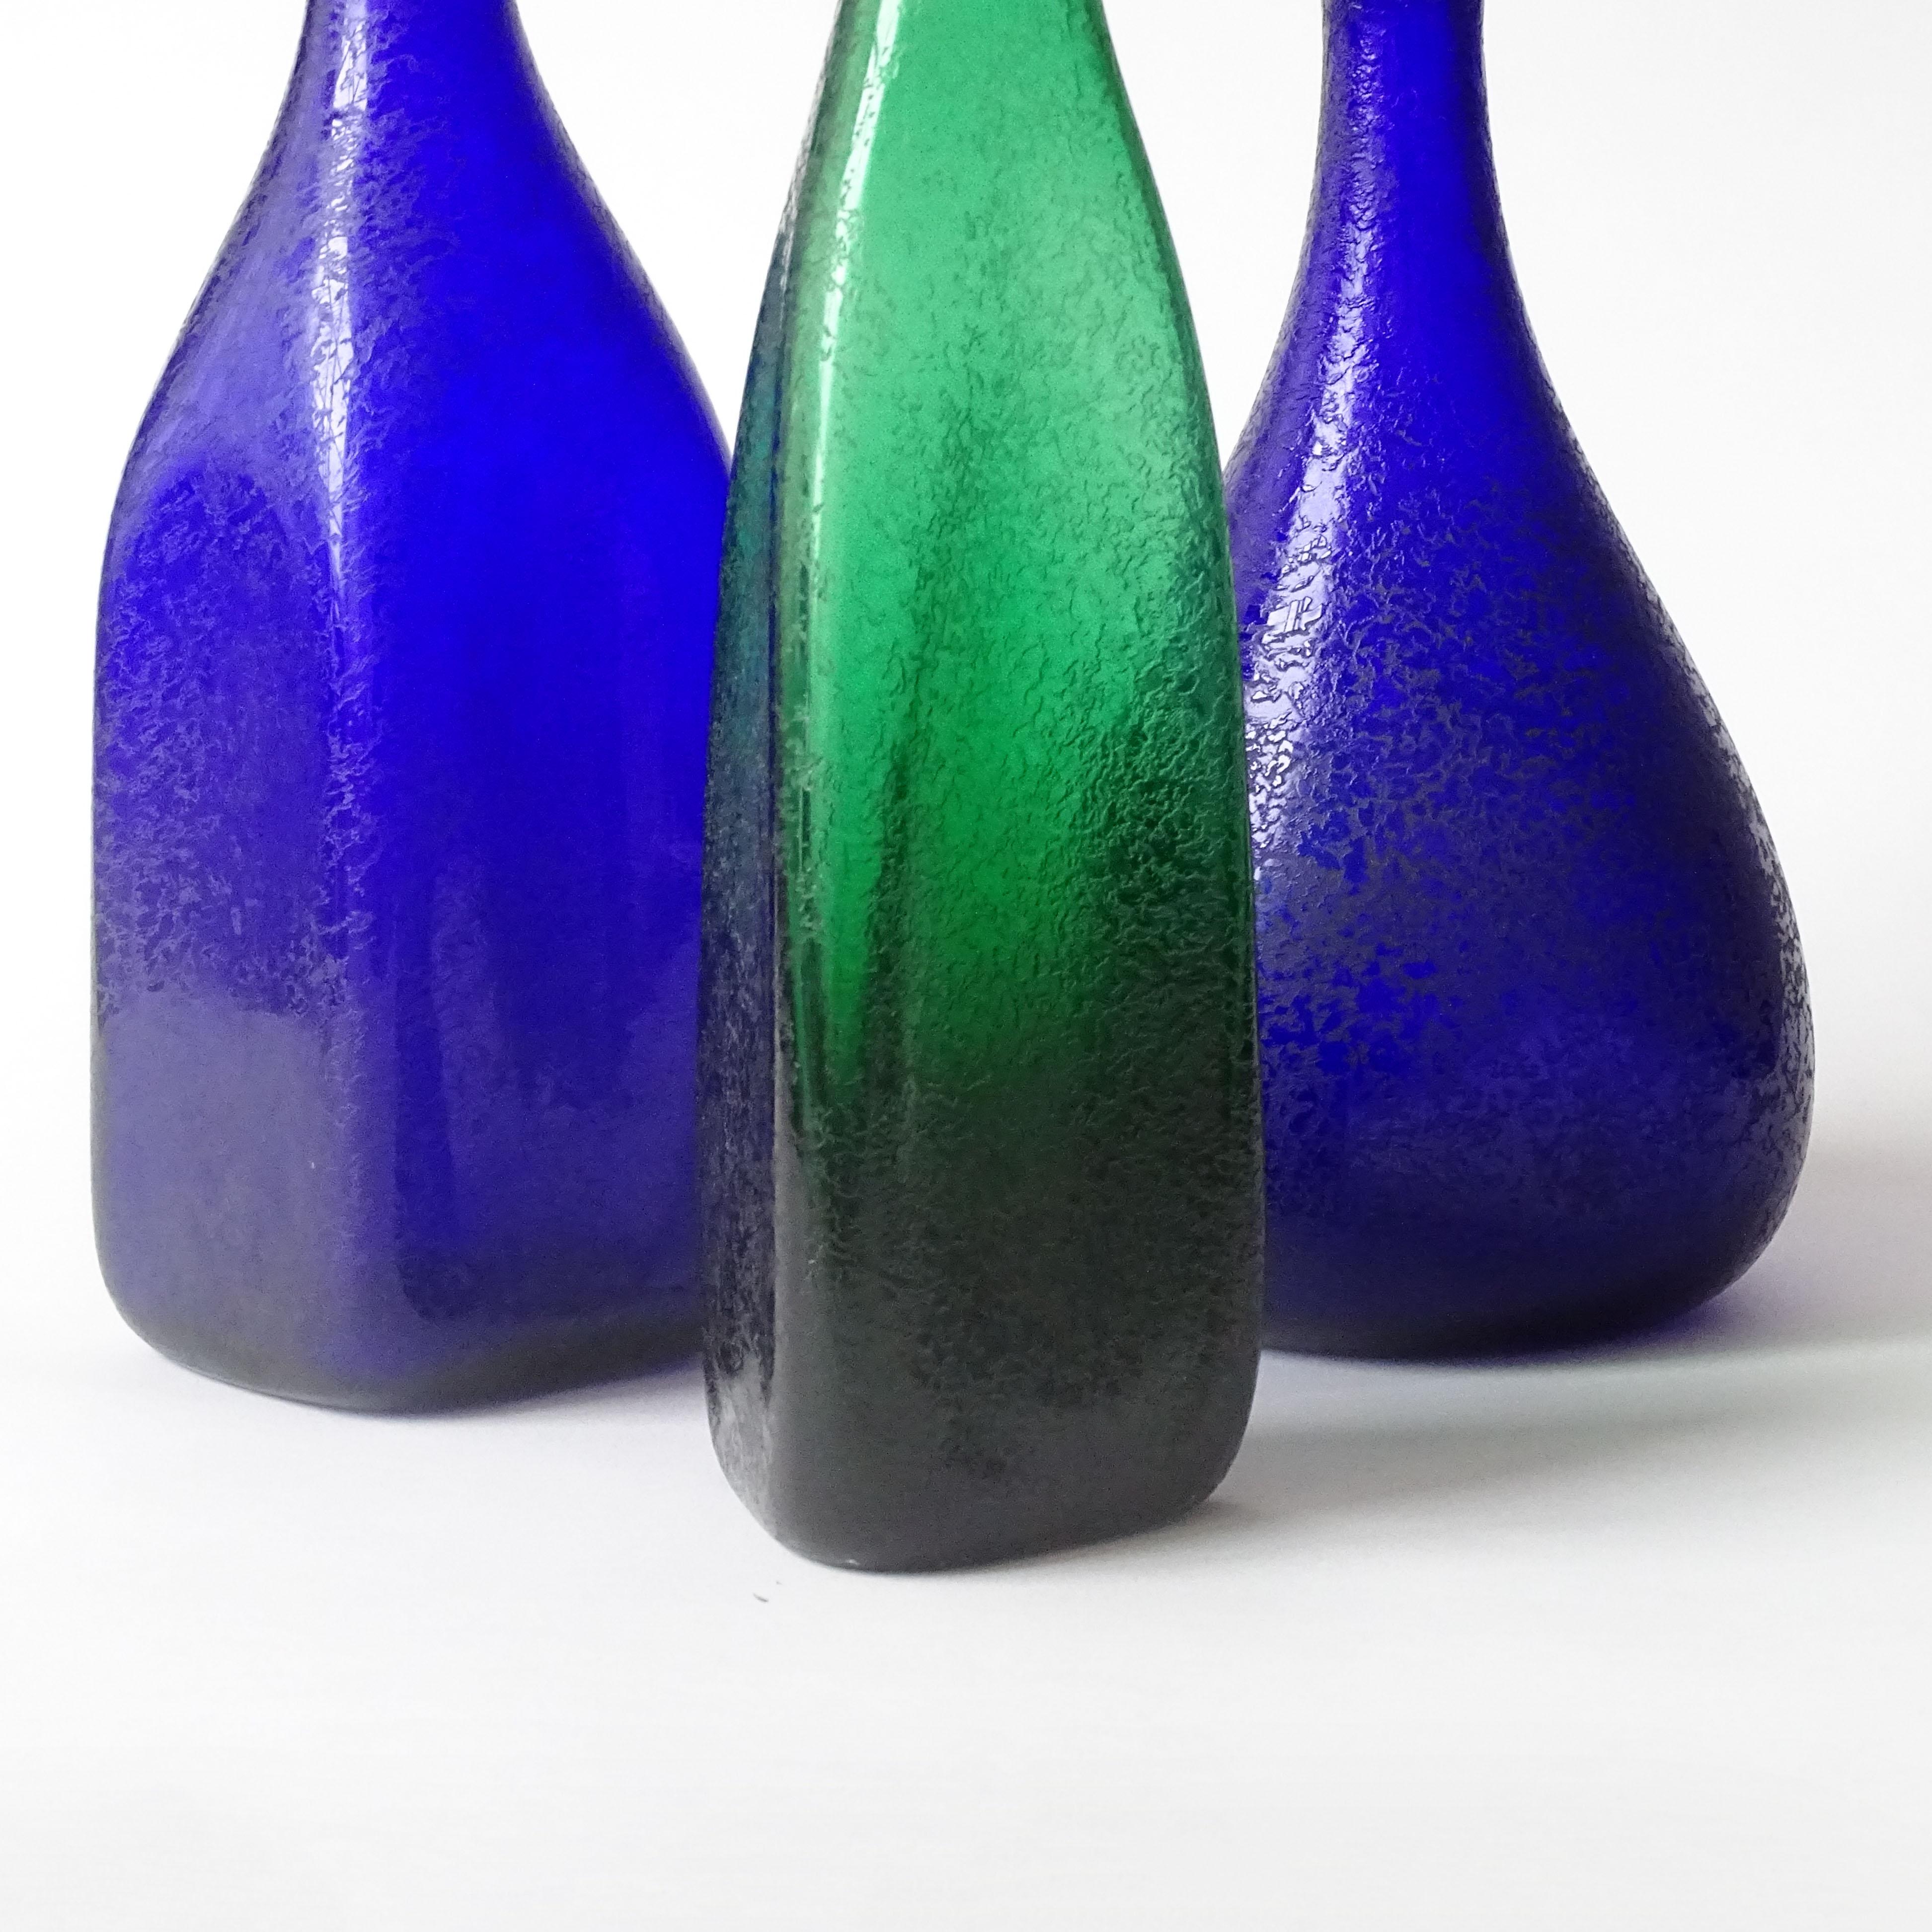 Carlo Nason set of three corroso Murano glass vases for Nason Moretti.
Measurements:
44 x 9 x 9 cm
36 x 9 x 9 cm
26.5 x 13 cm
